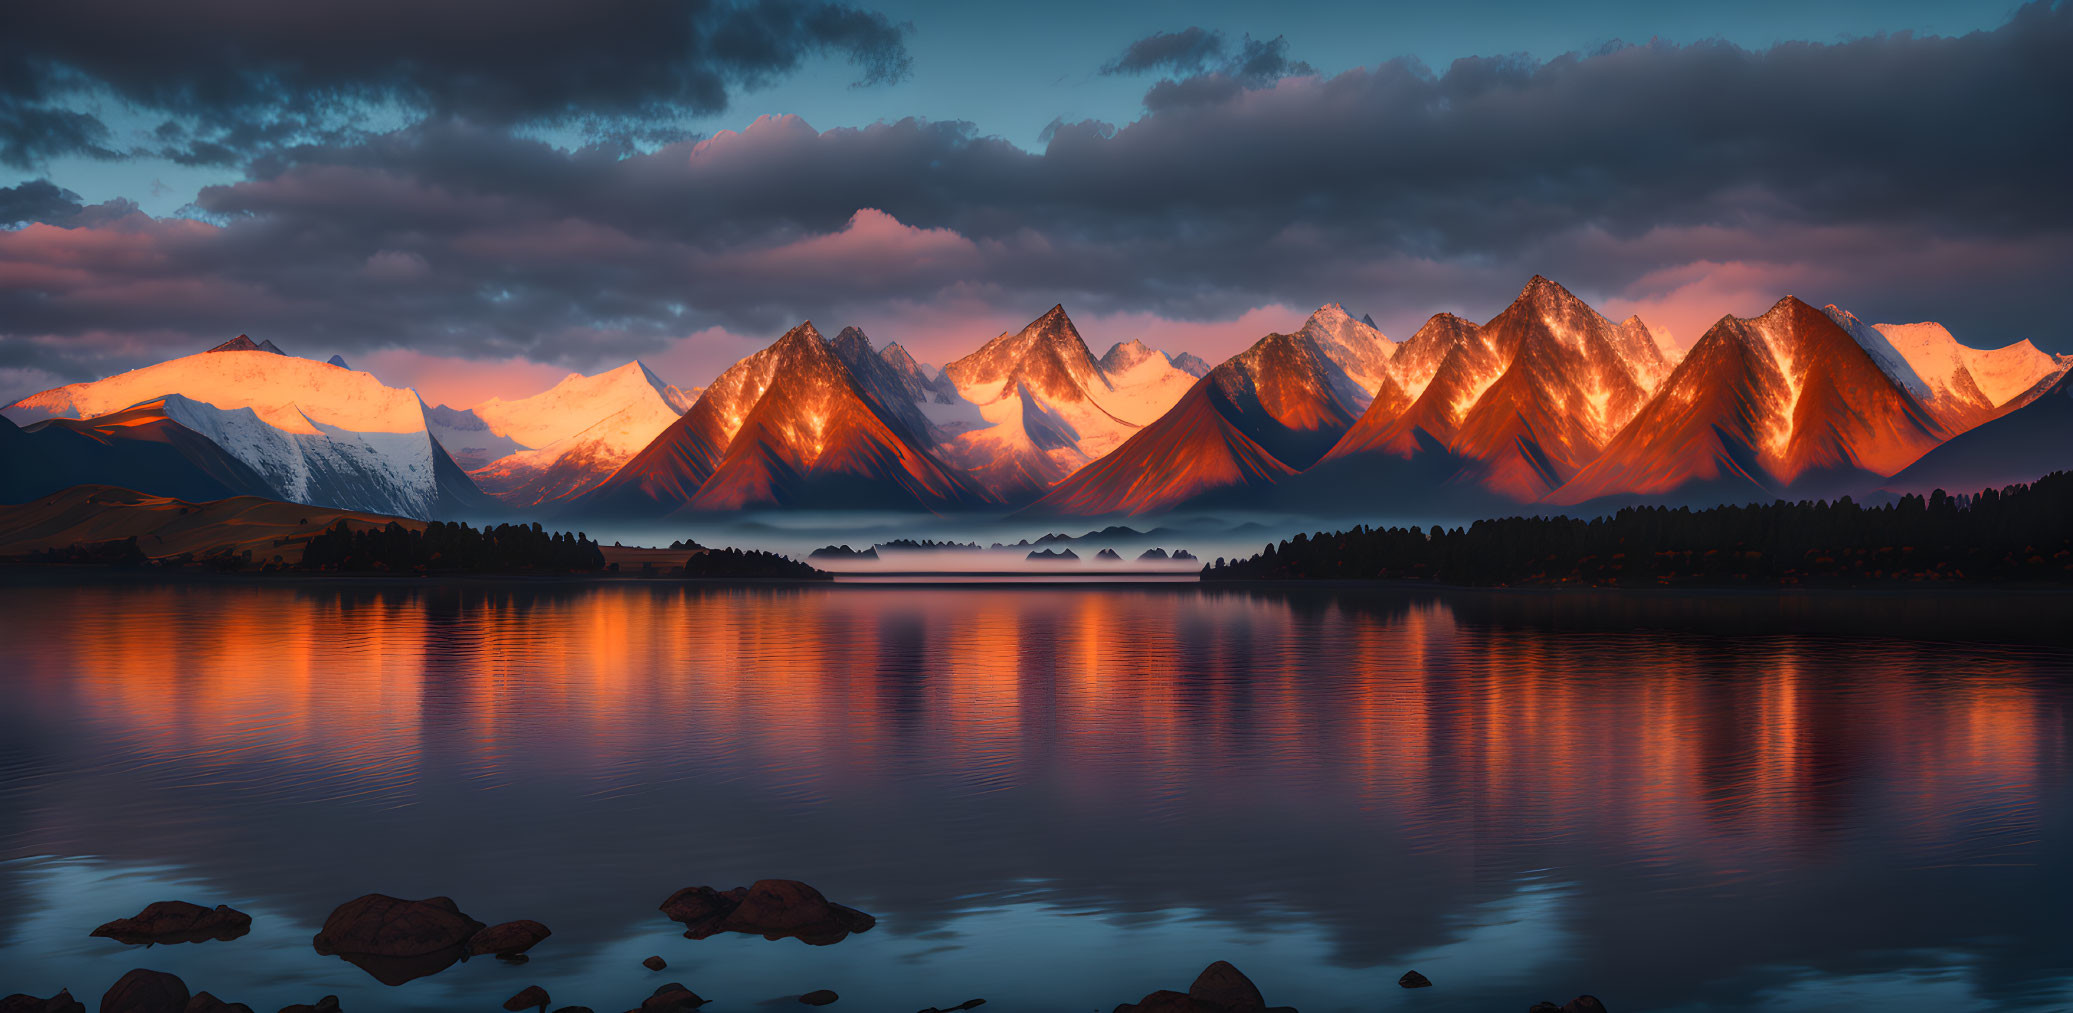 The sunset light on snow mountains